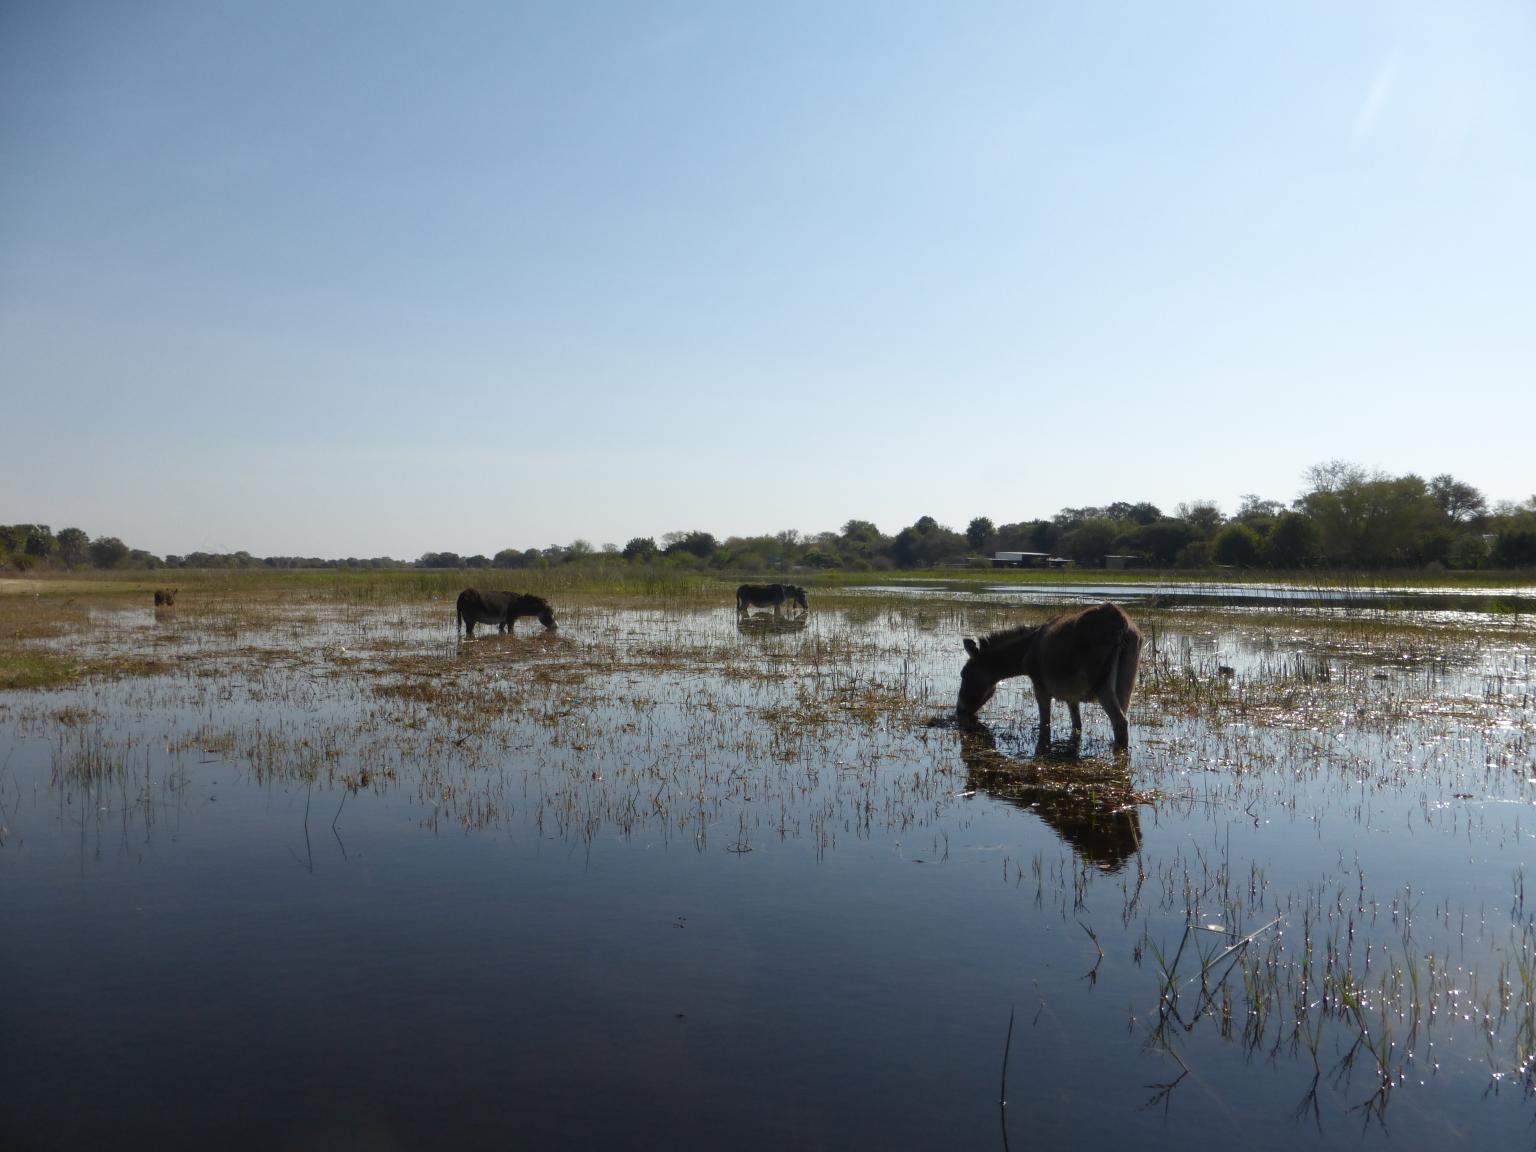 Donkeys grazing in the shallow waters of the Okavango Delta, Botswana